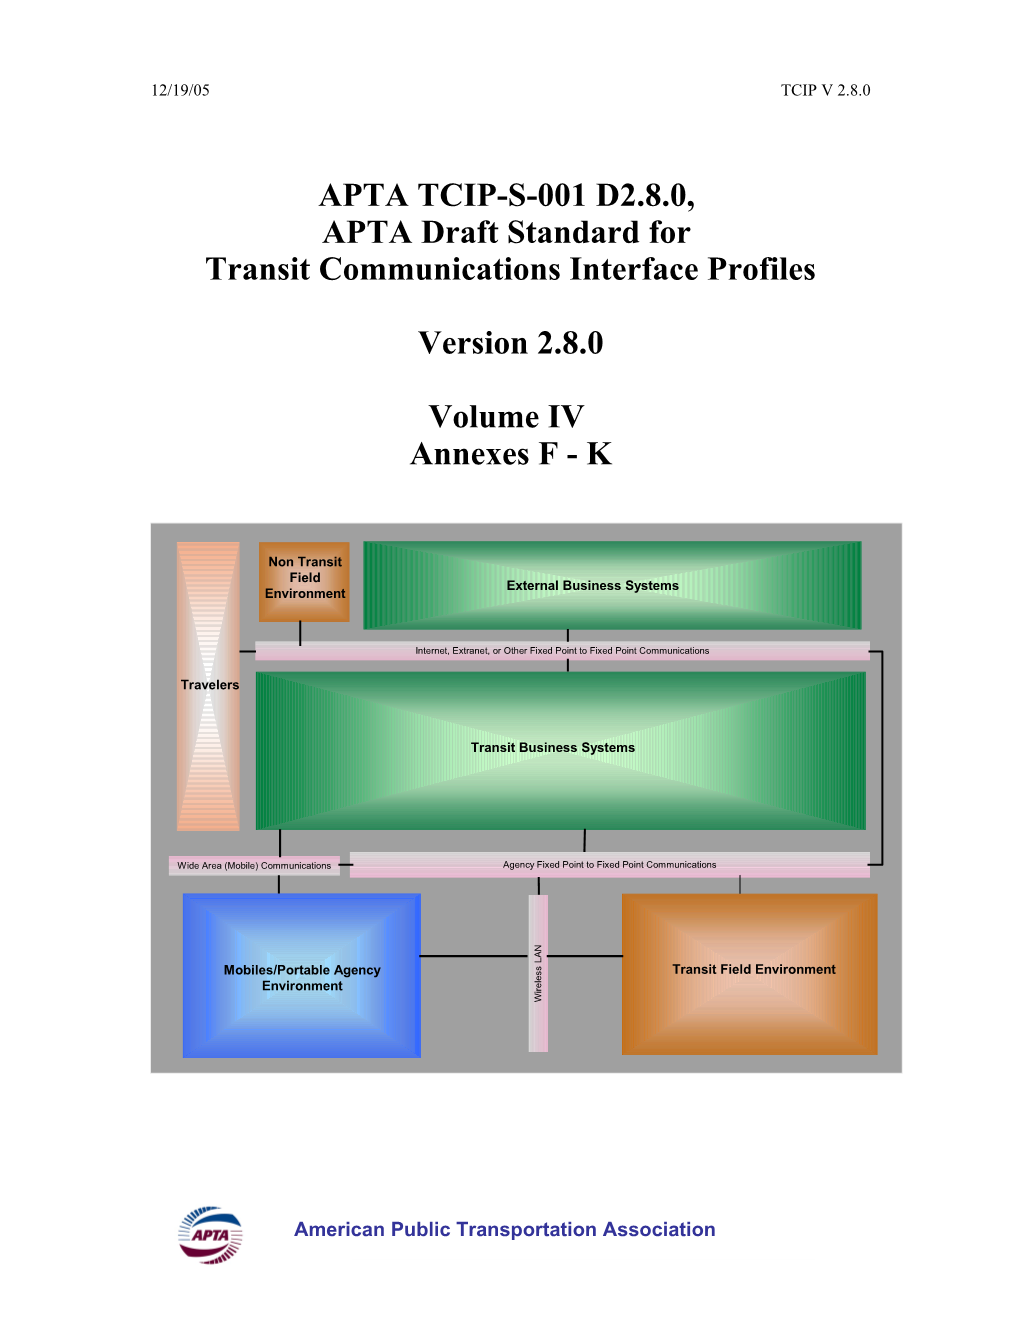 APTA Draft Standard For